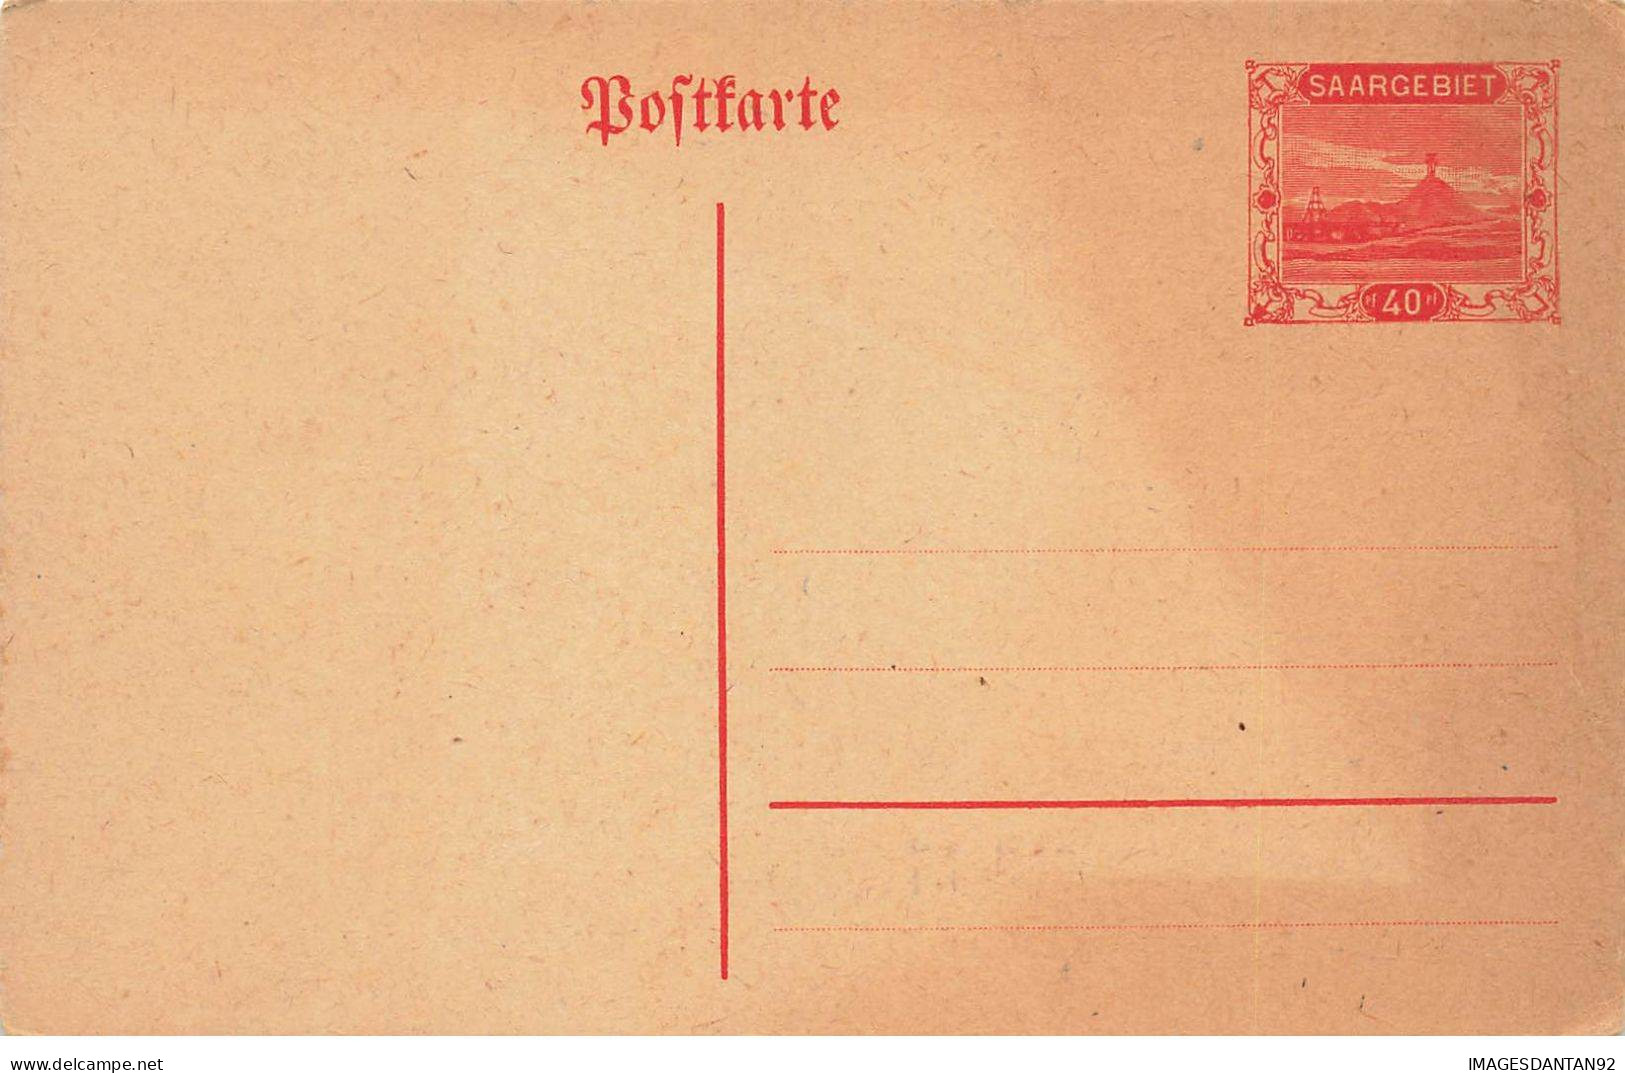 SARRE SAAR #32793 ENTIER SAARGEBIET 40 ALLEMAGNE POSTE PRIVE - Postal Stationery